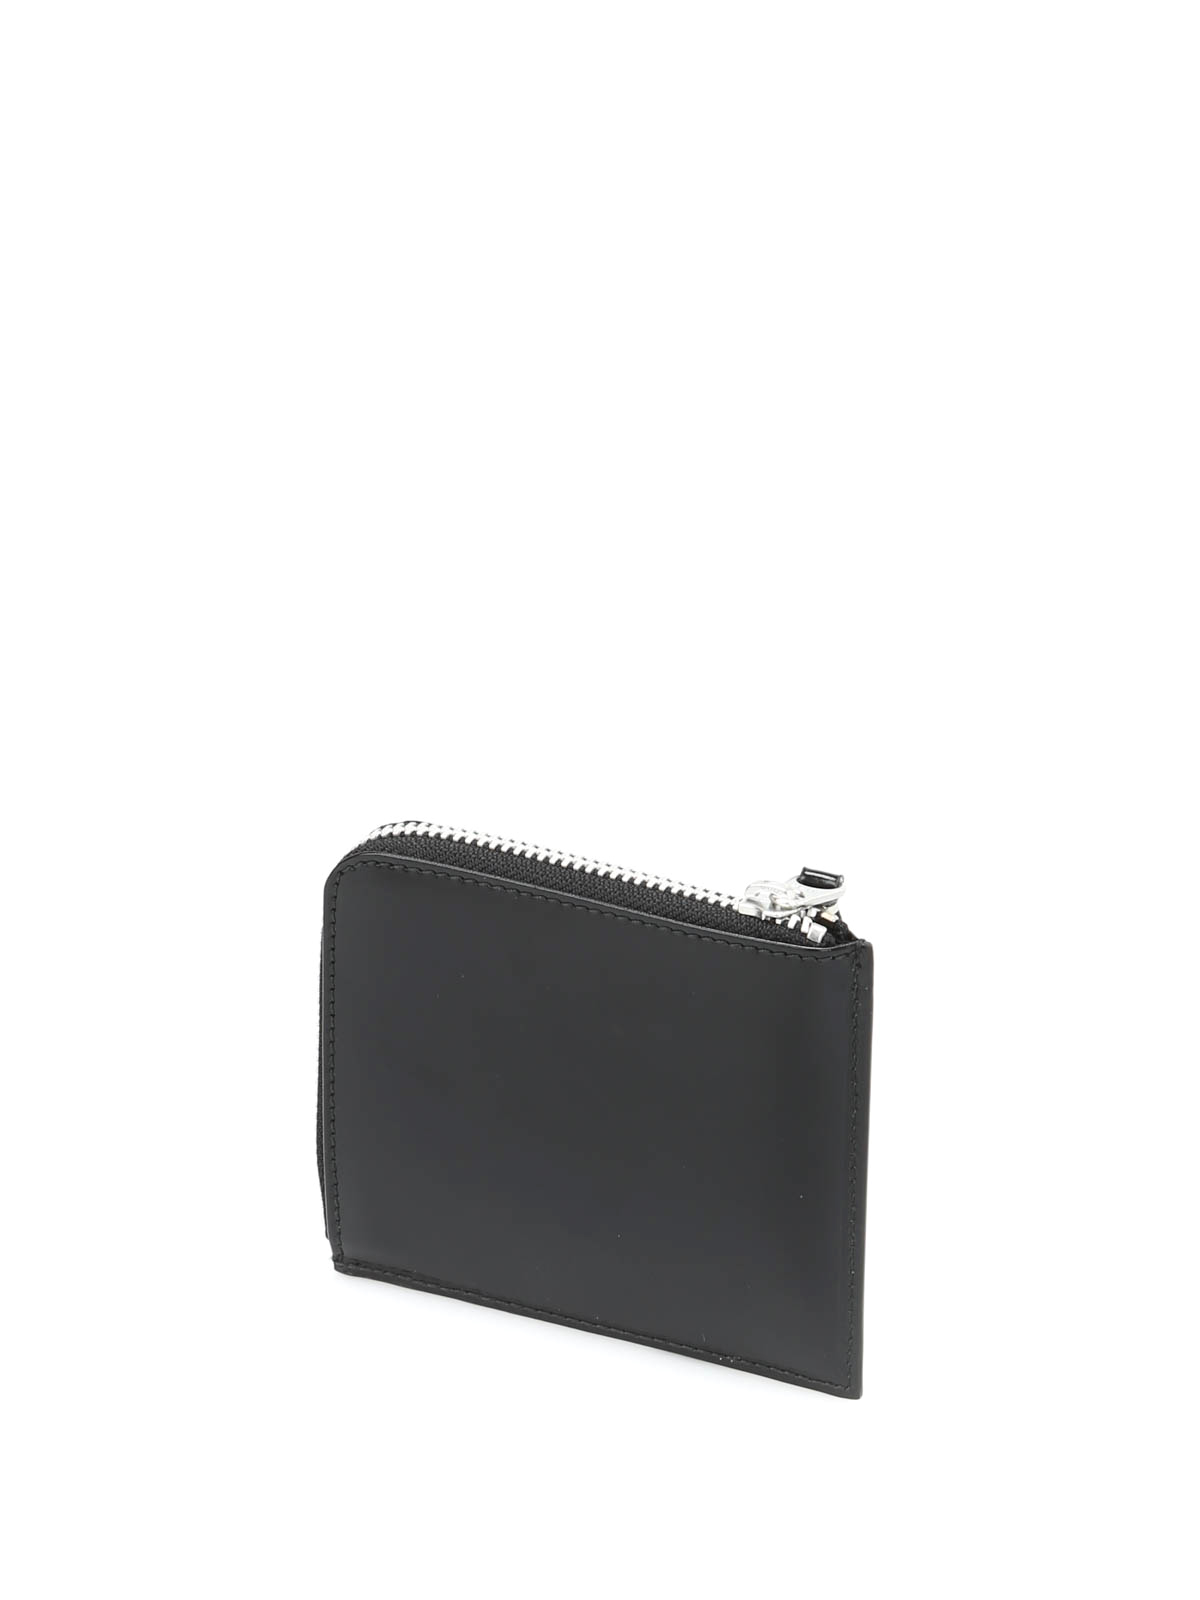 Buy Moflycom Women's RFID Blocking Leather Zip Around Wallet Clutch Purse ( Black) at Amazon.in